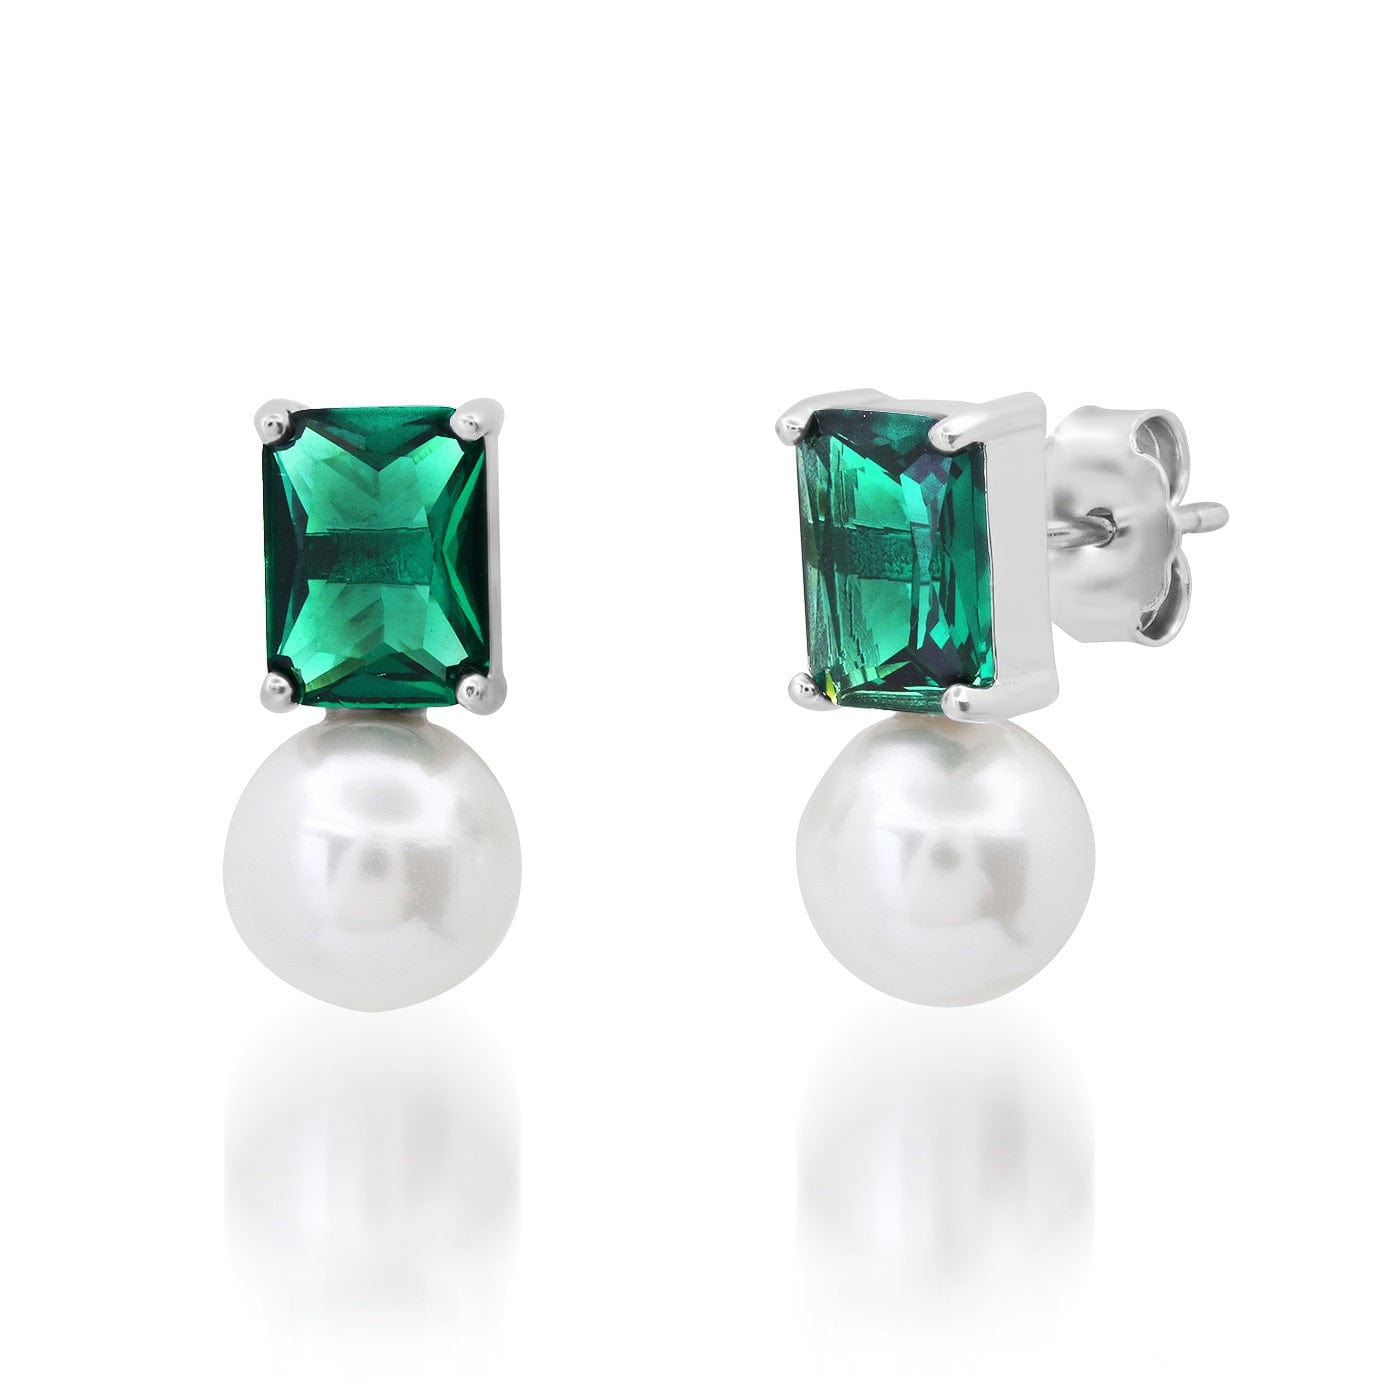 TAI JEWELRY Earrings Emerald Clear Emerald Cut Glass and Pearl Drop Earrings